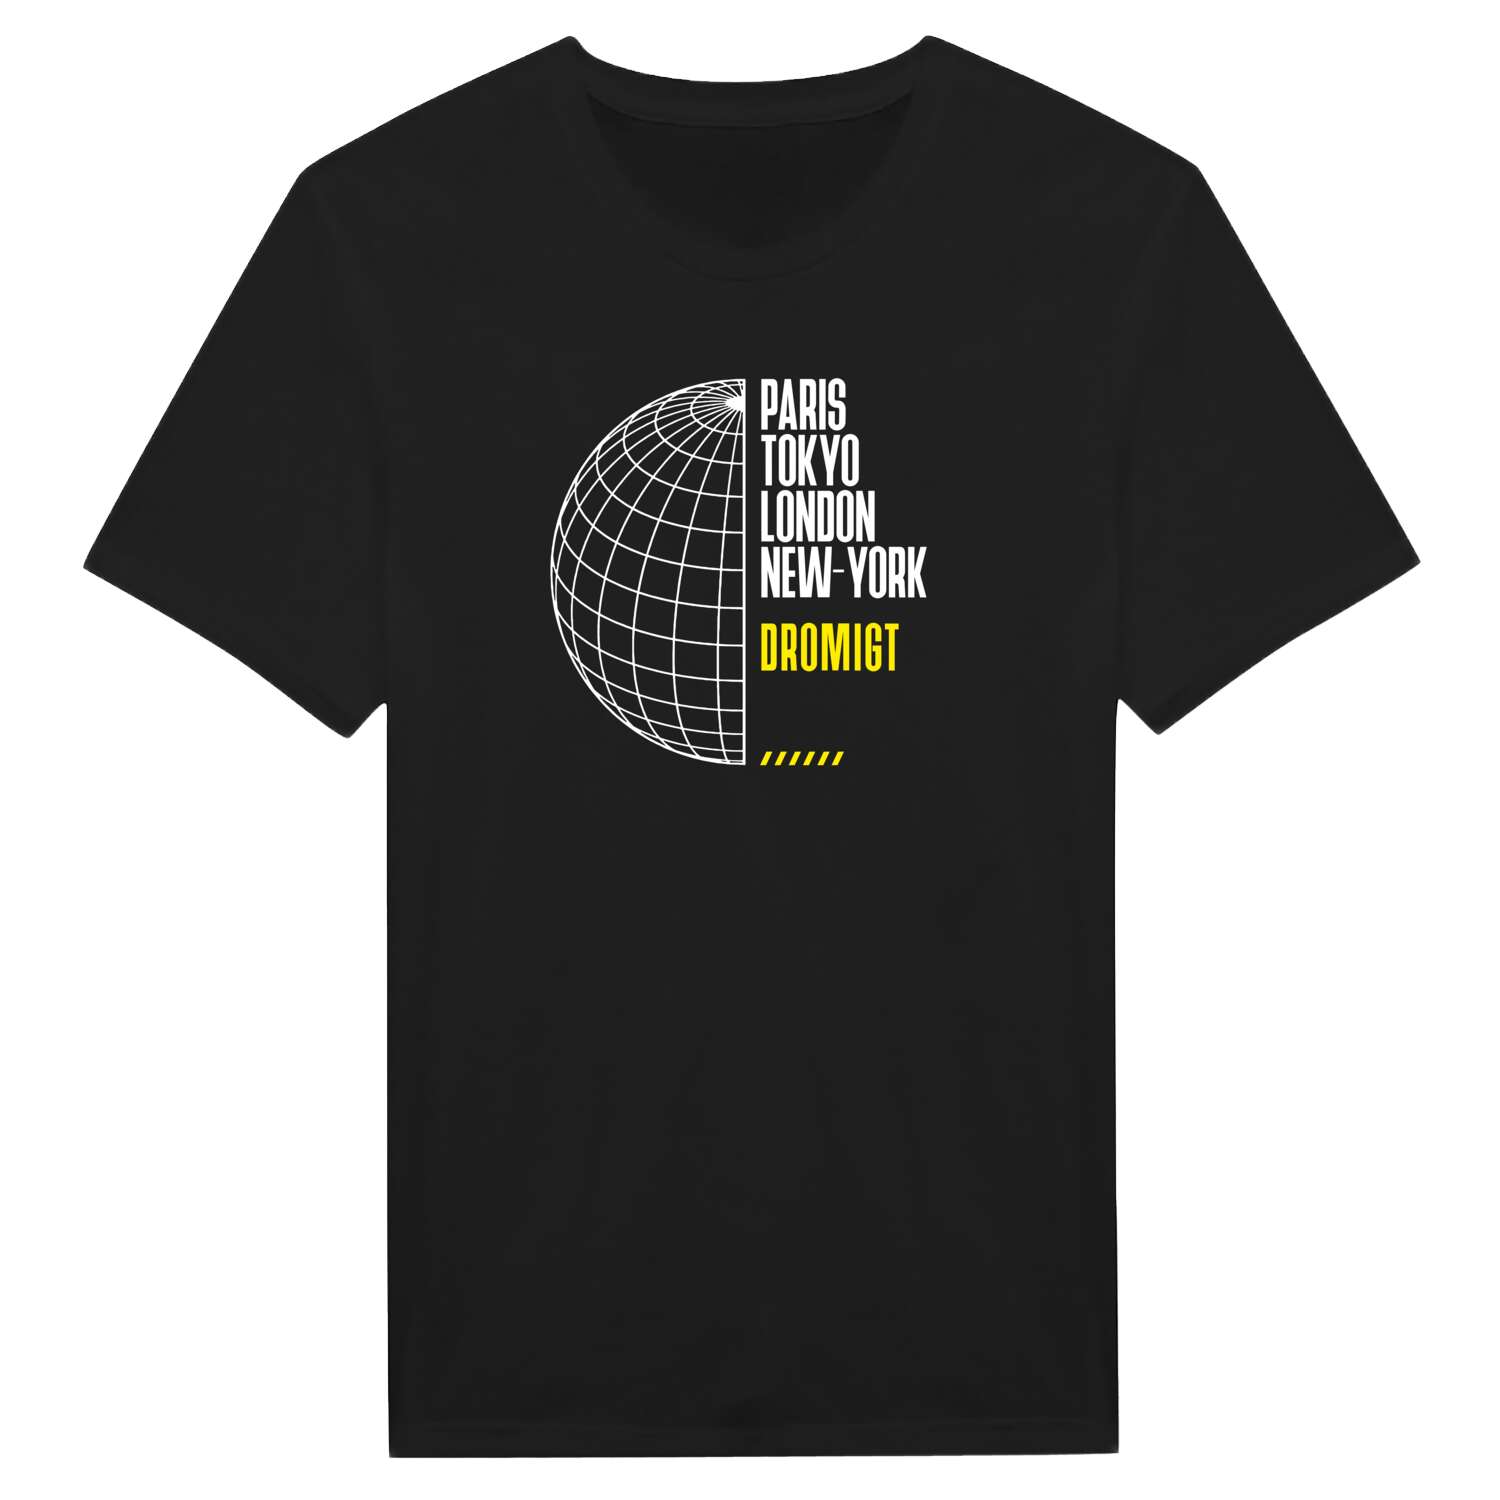 Dromigt T-Shirt »Paris Tokyo London«